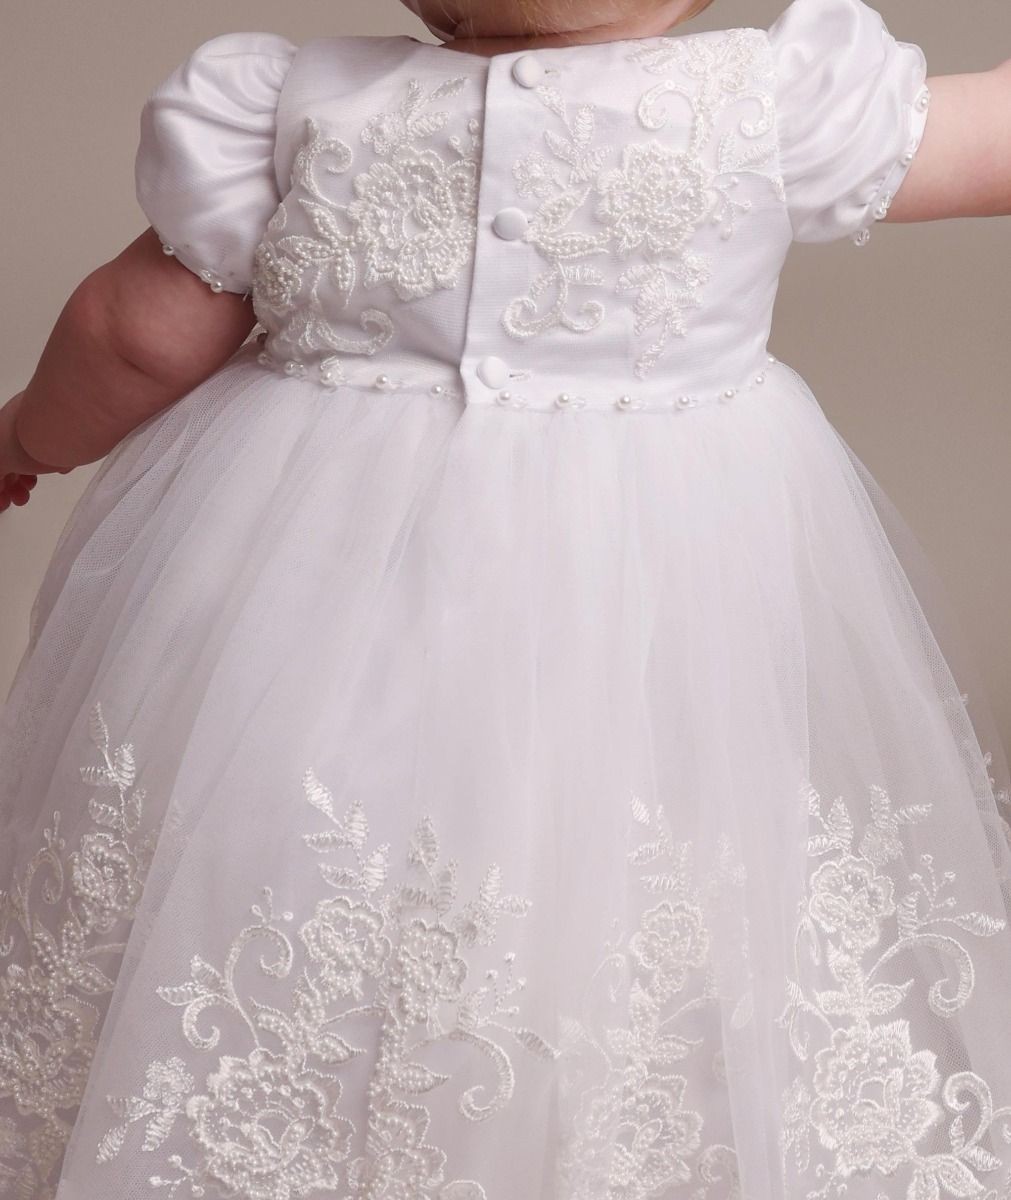 Baby Girls Heirloom Lace Christening Gown & Bonnet - ALEXA